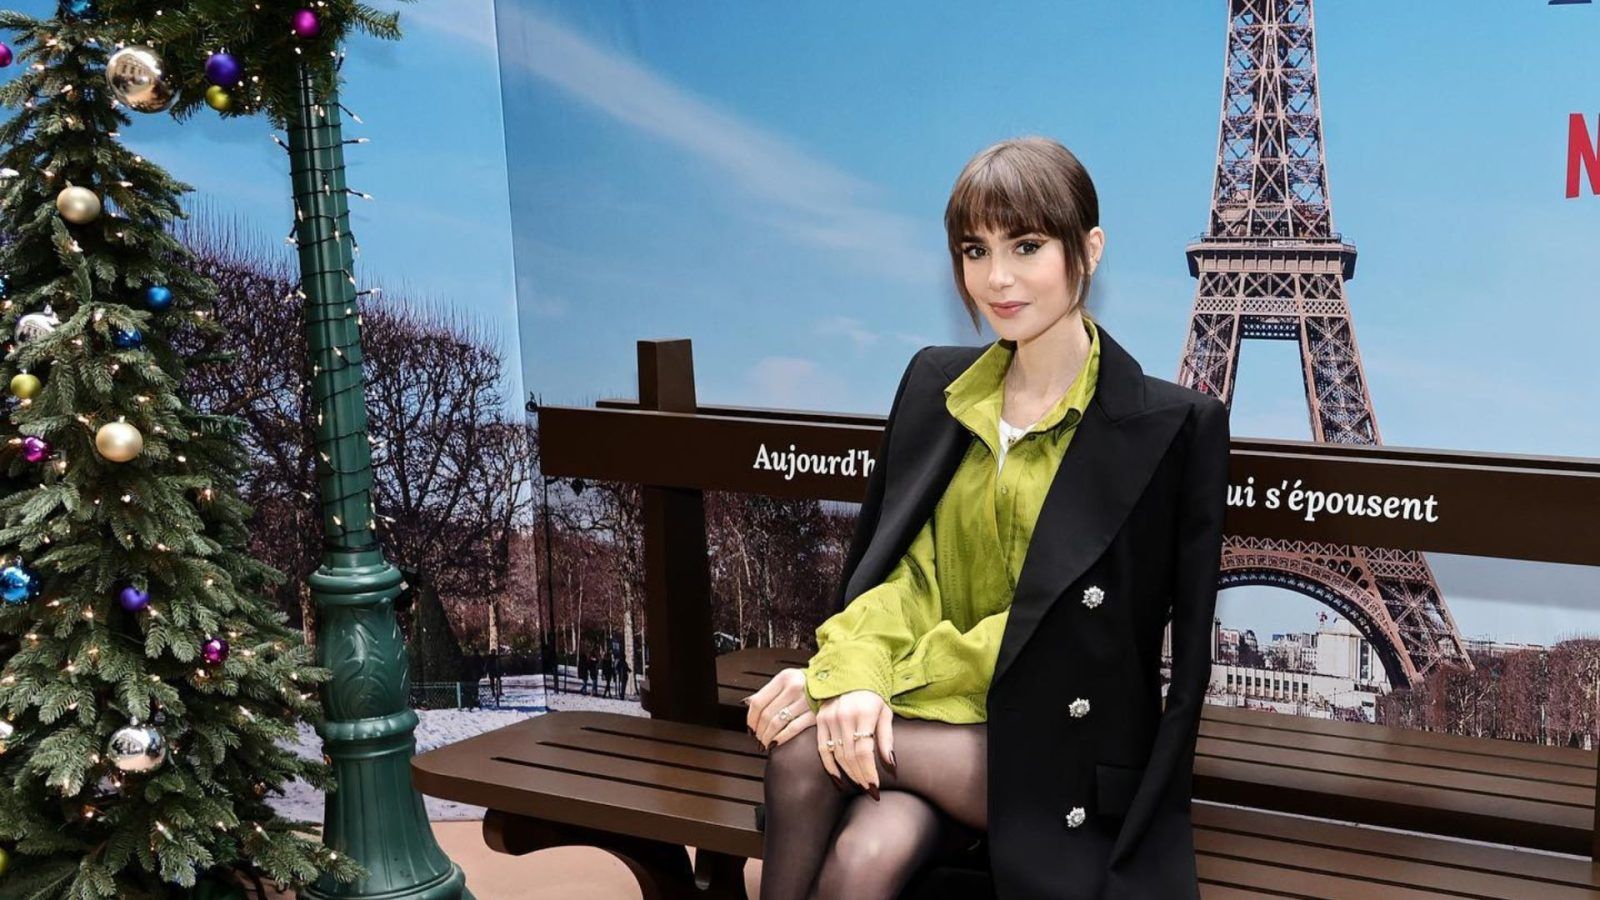 _Emili in Paris_ Outfit, ShopLook